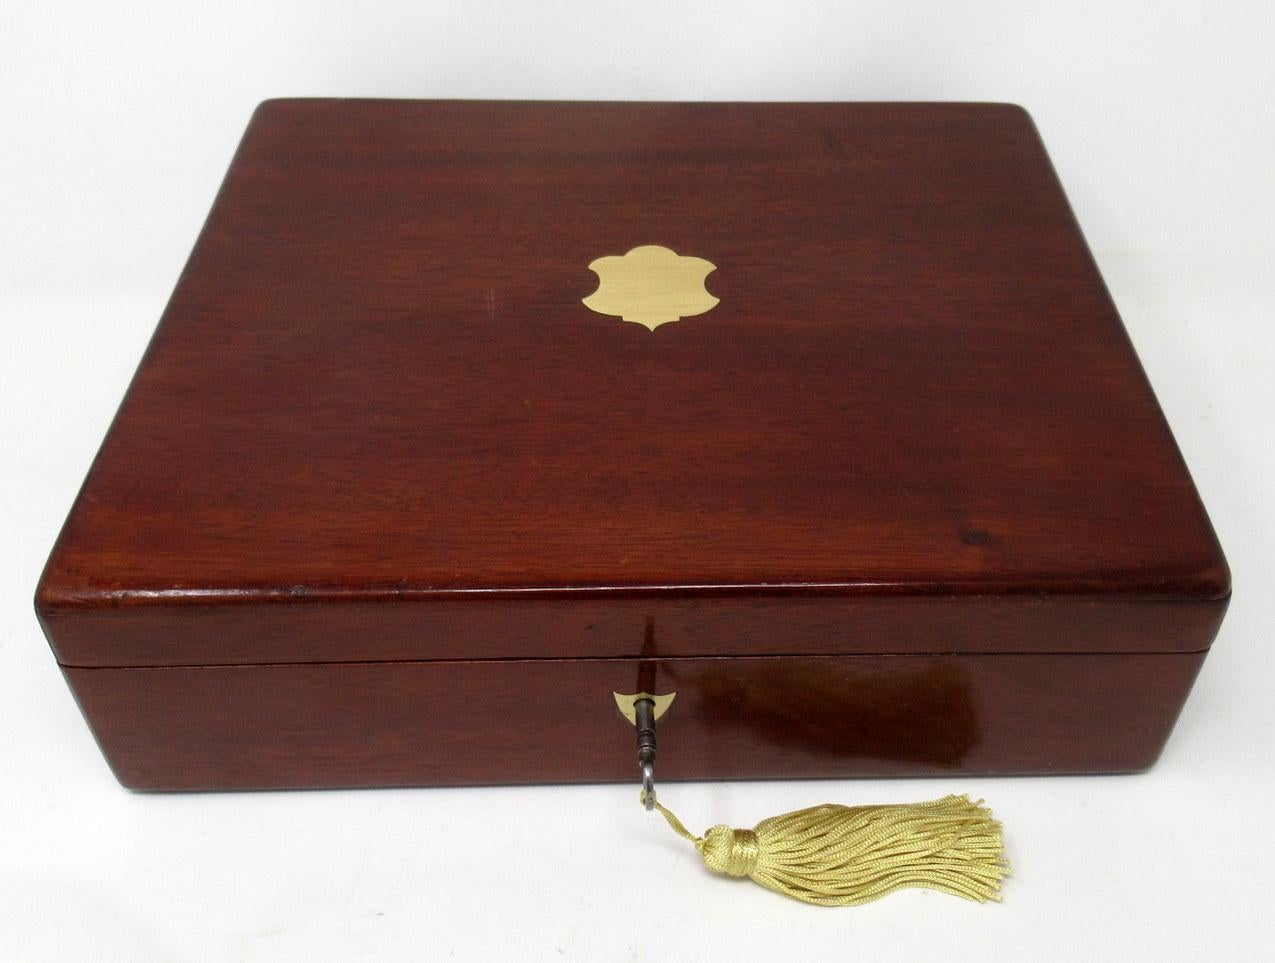 English Antique Vintage Mahogany Wooden Jewelry or Gentleman's Cigar Box Casket